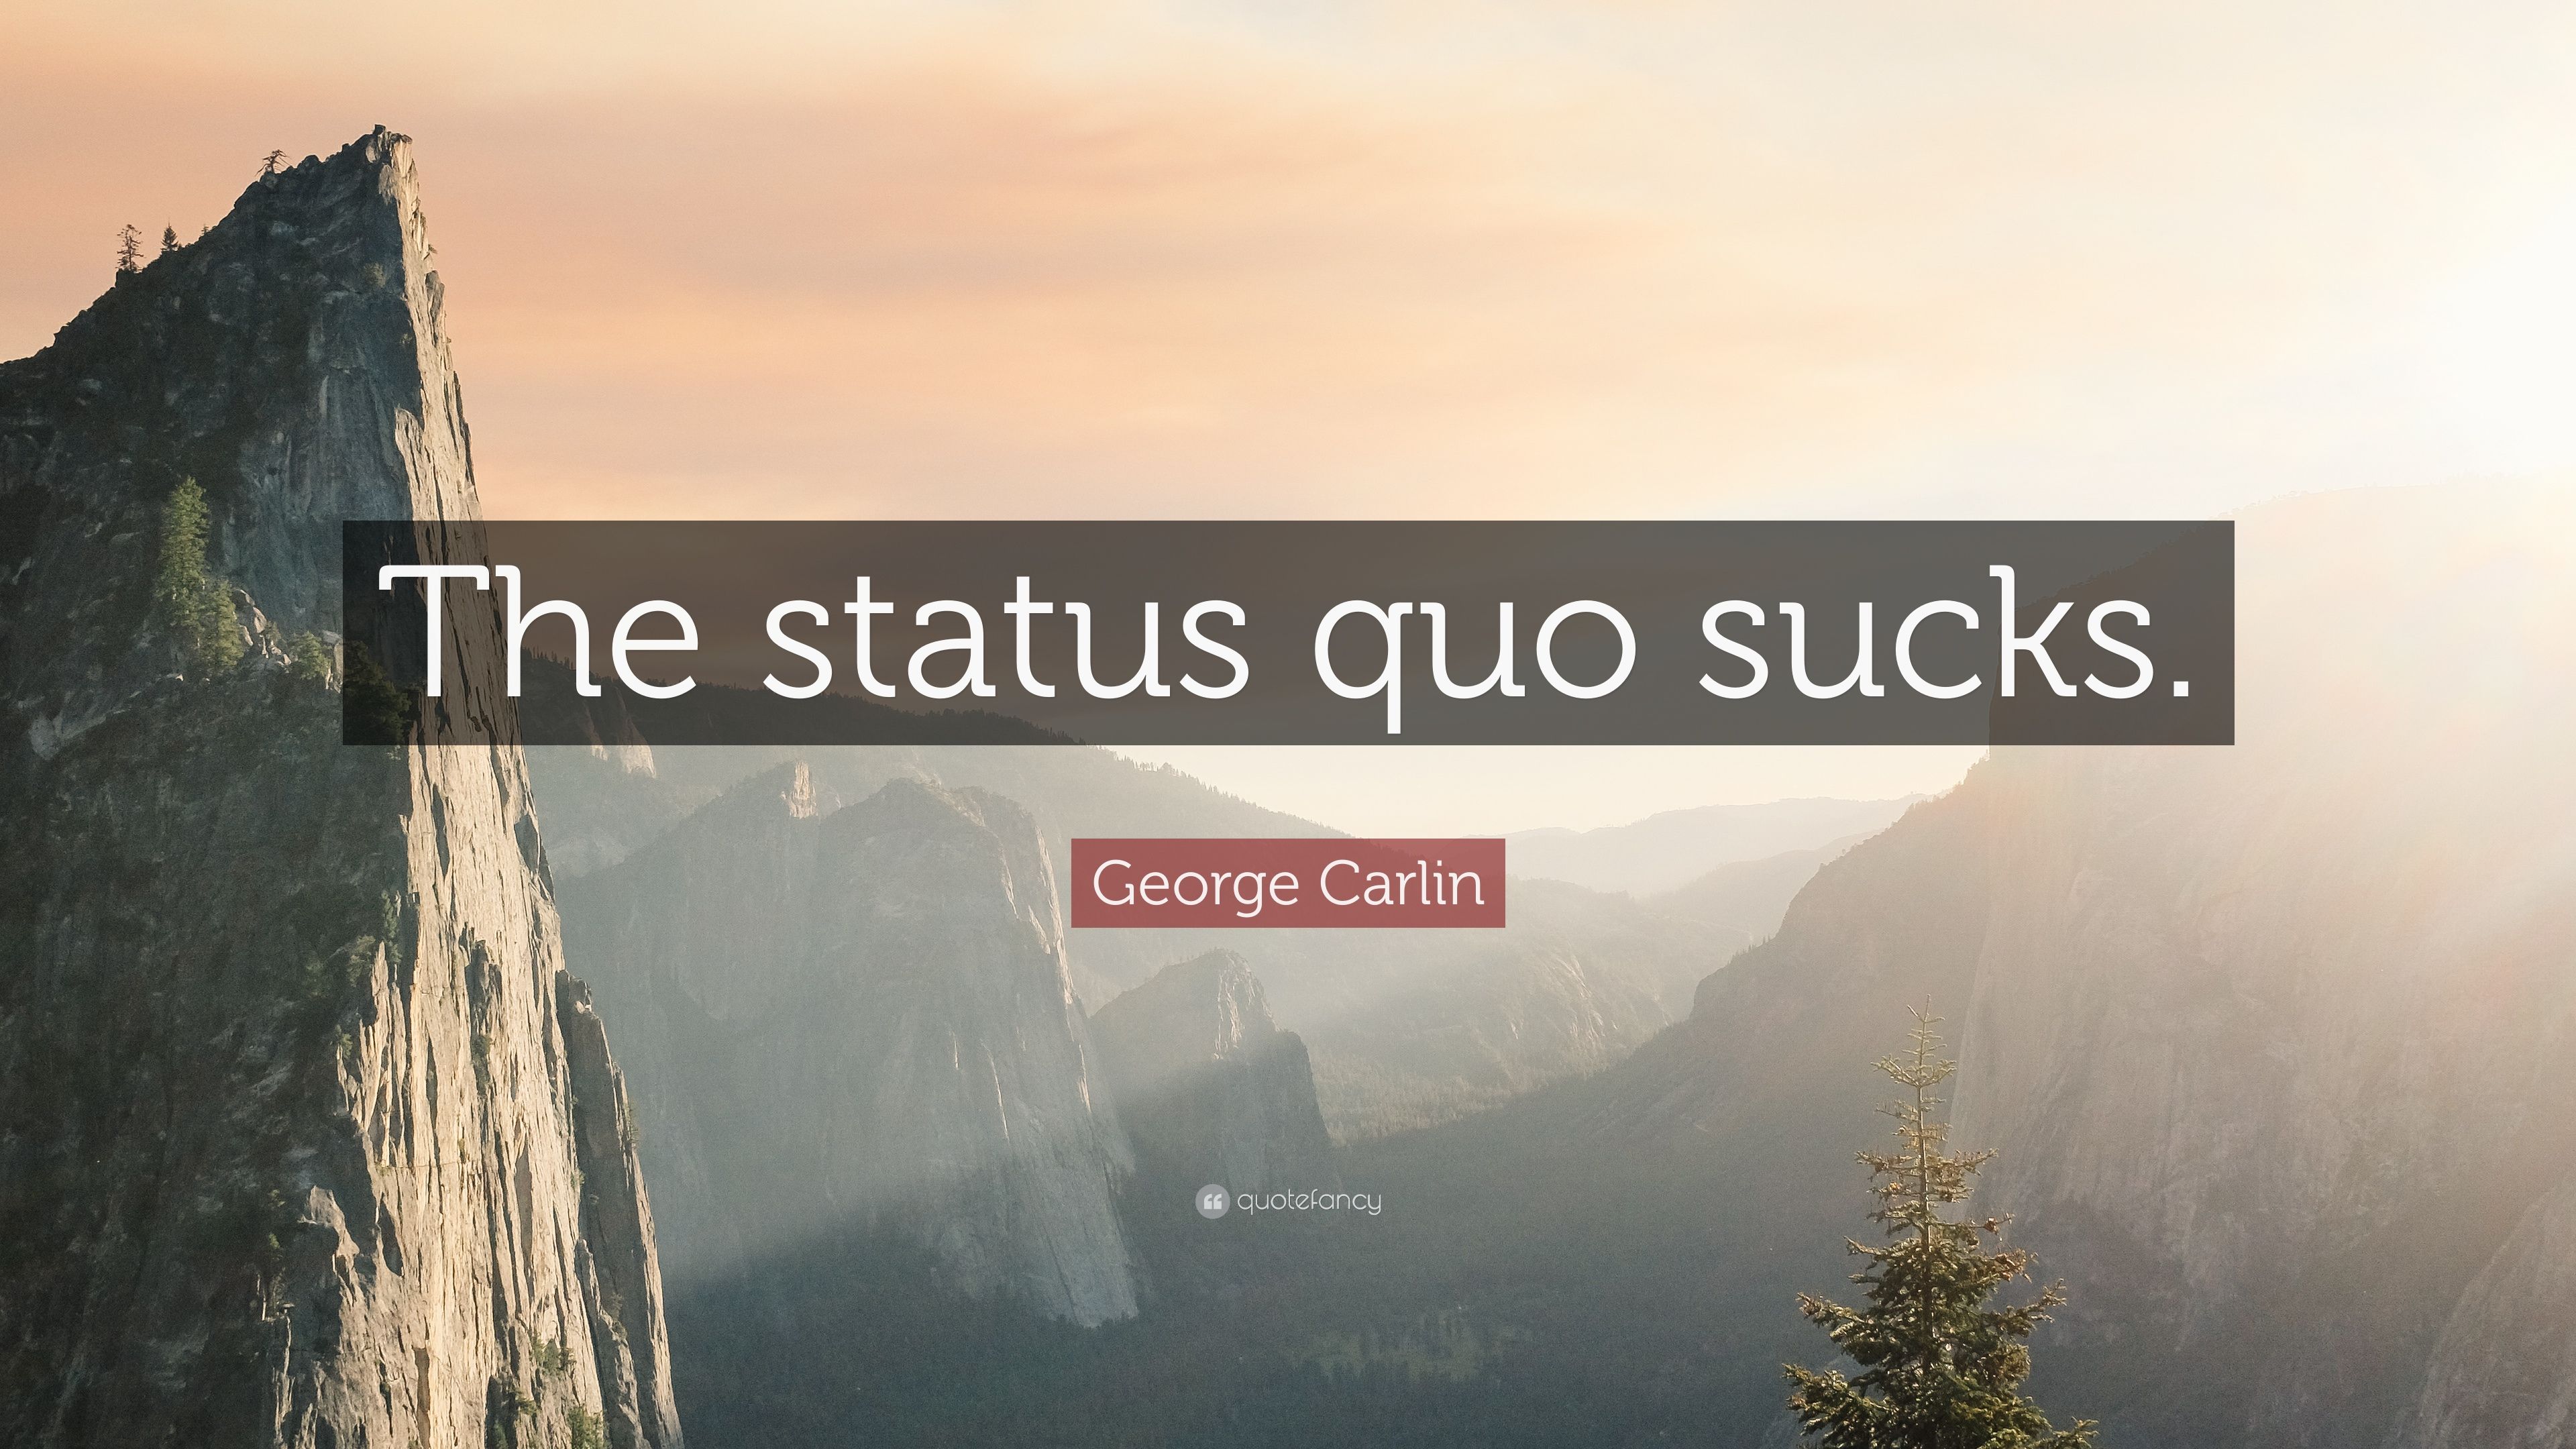 George Carlin Quote: “The status quo sucks.” 12 wallpaper